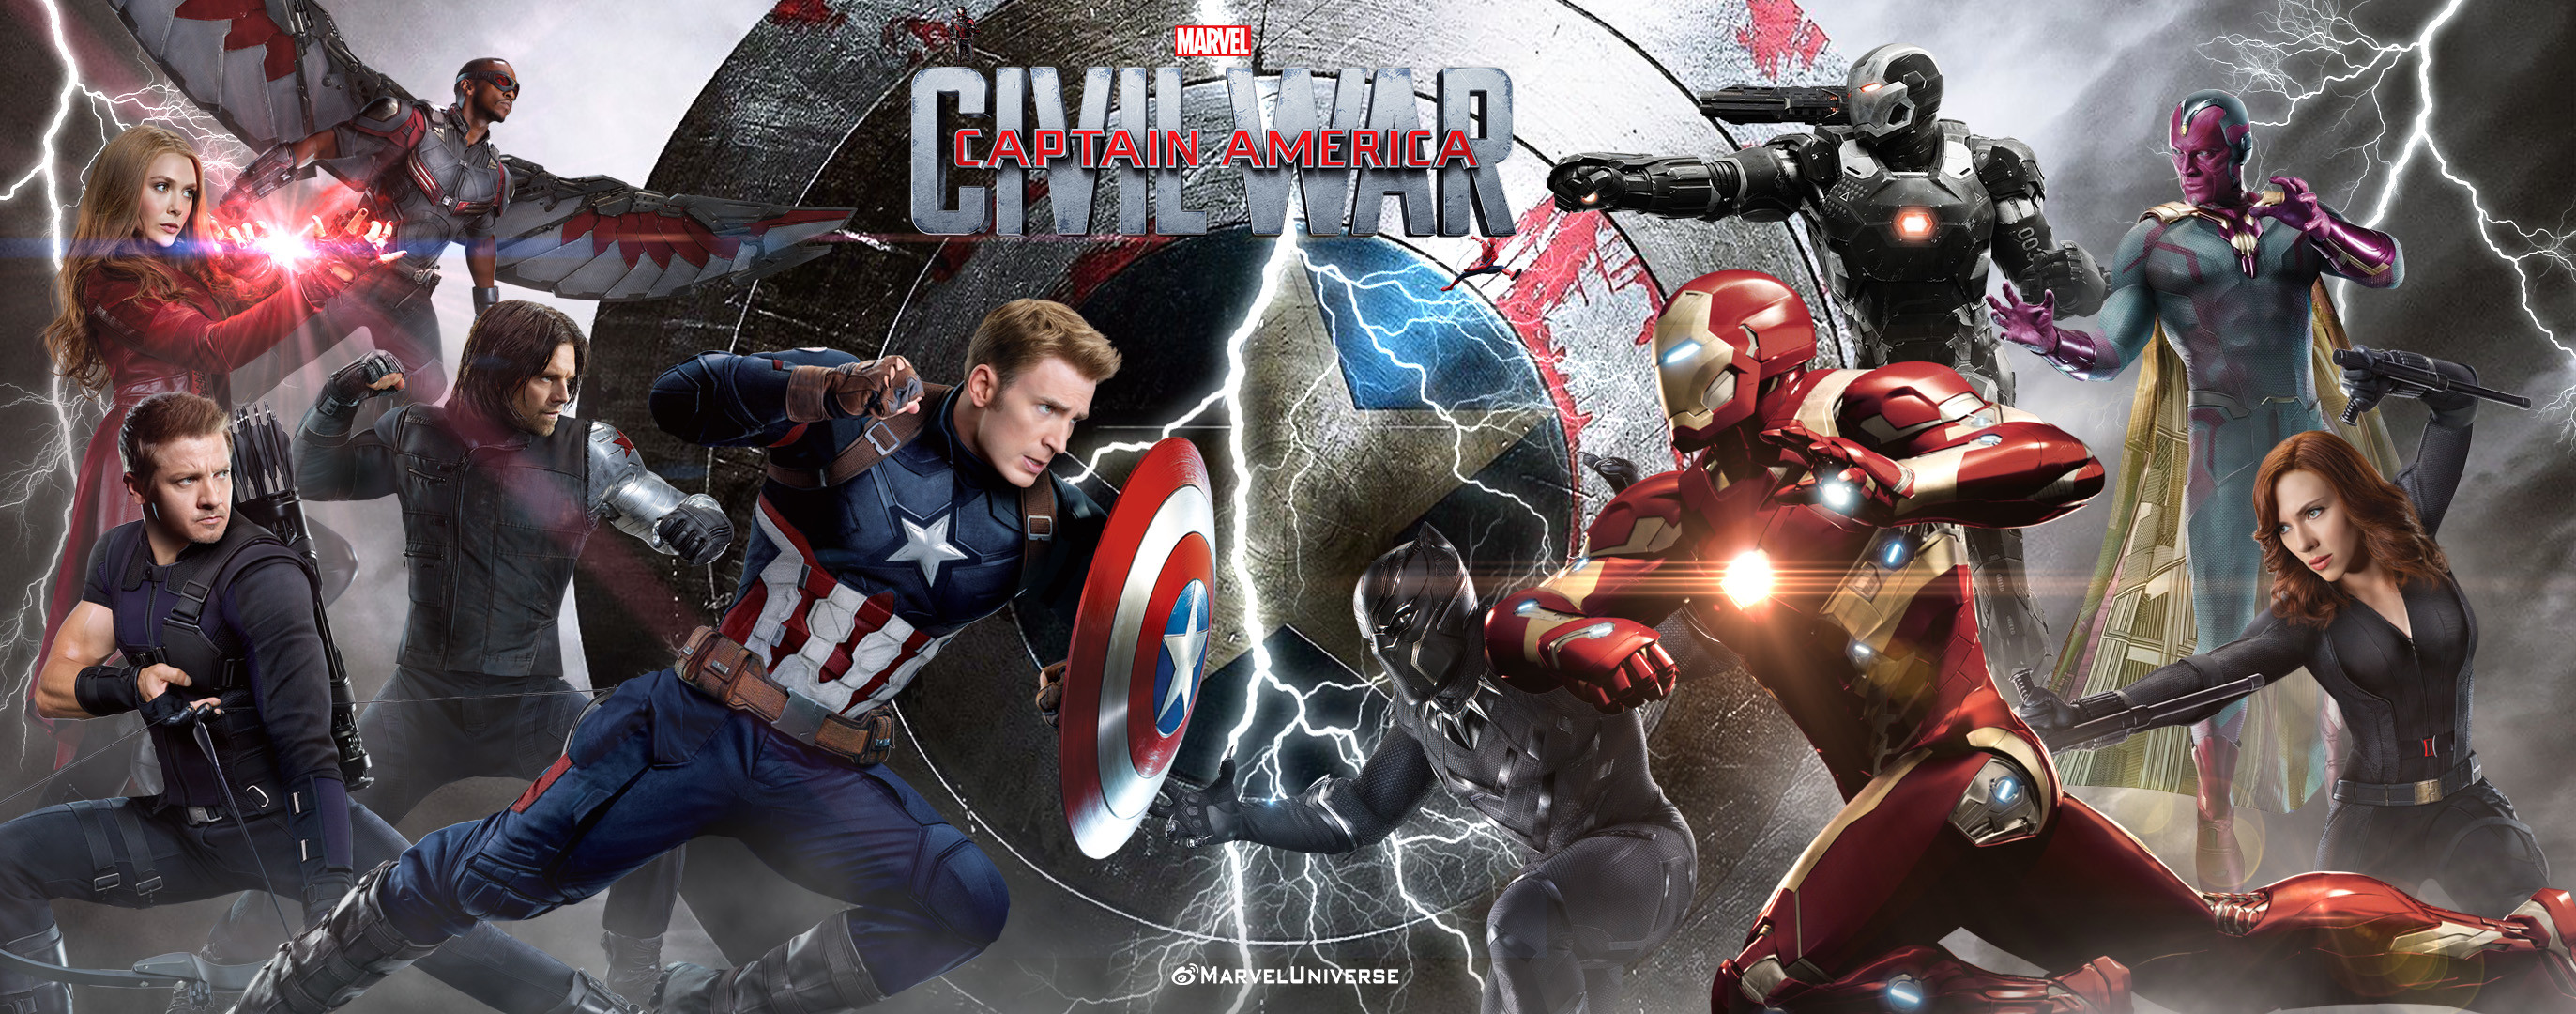 2745x1080 Smashing HD Wallpapers of Captain America Civil War